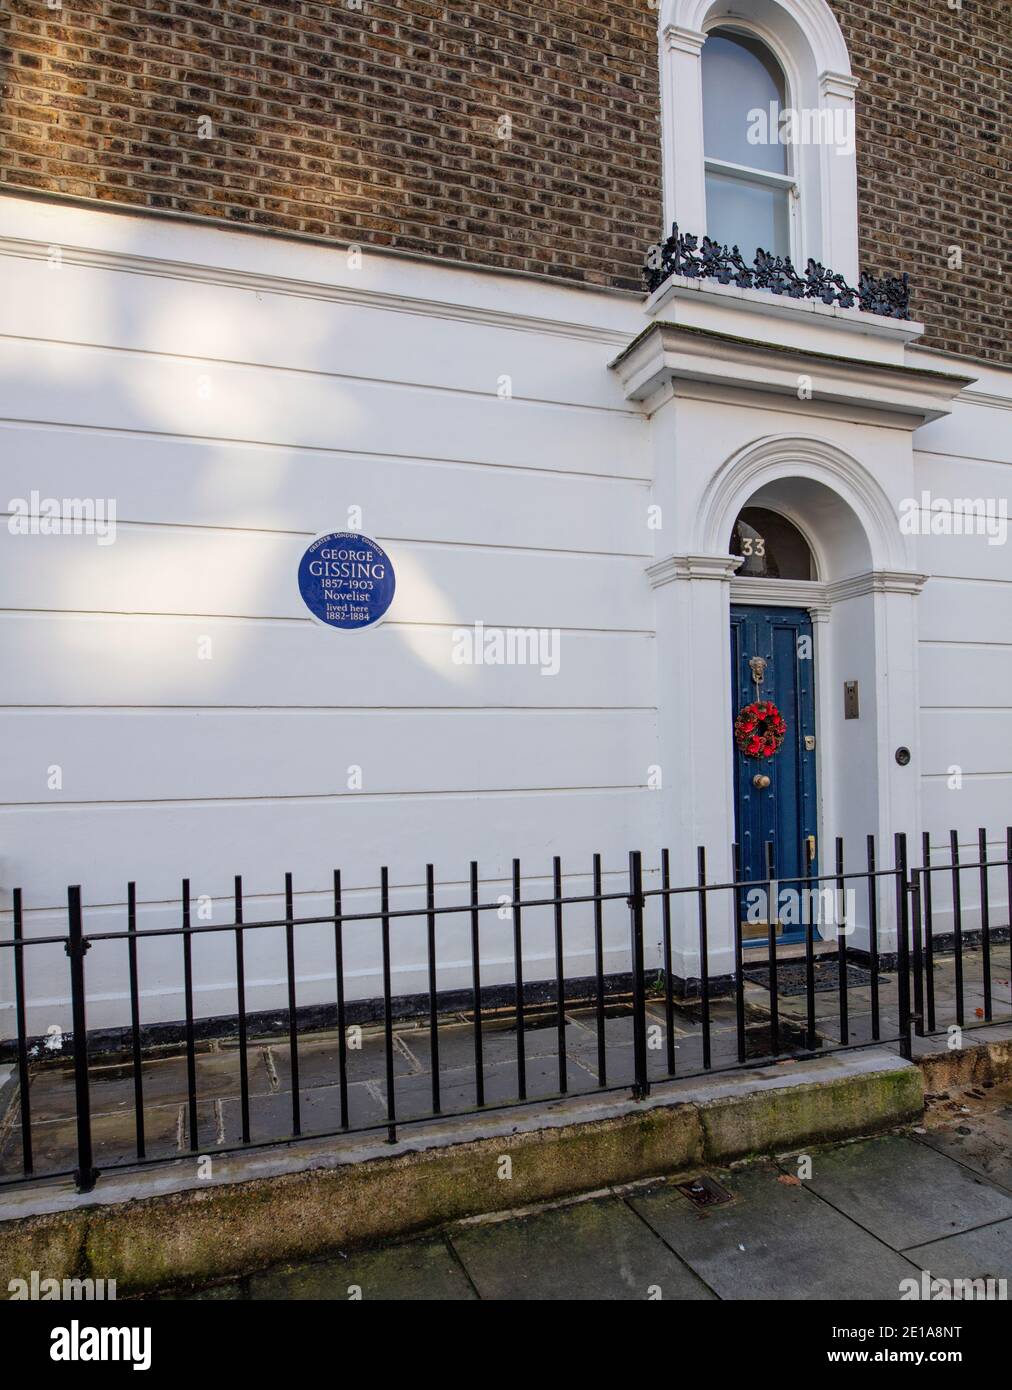 Greater London Council Blaue Plakette für George Gissing, Schriftsteller, 33 Oakley Gardens, SW3 5NZ; er lebte dort 1882-1884 Stockfoto